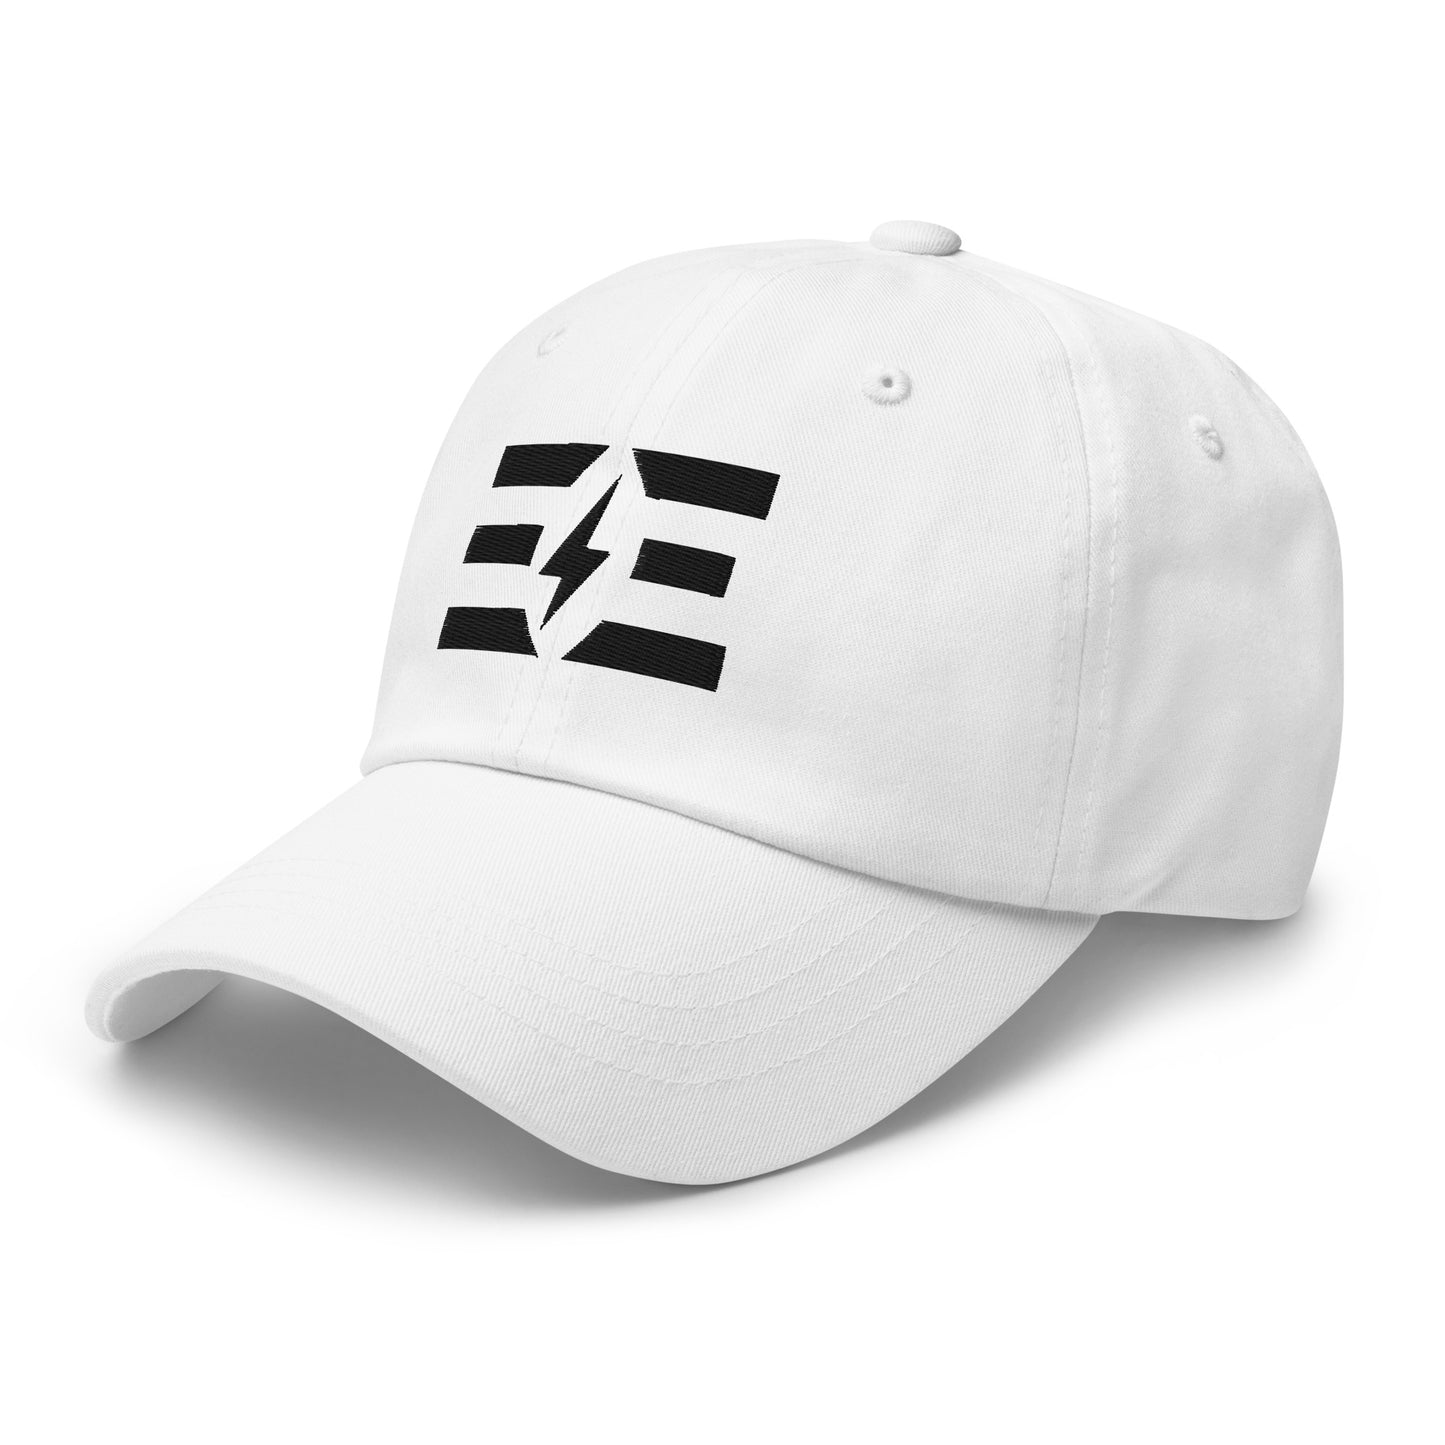 Endurance eSports Dad hat - Black